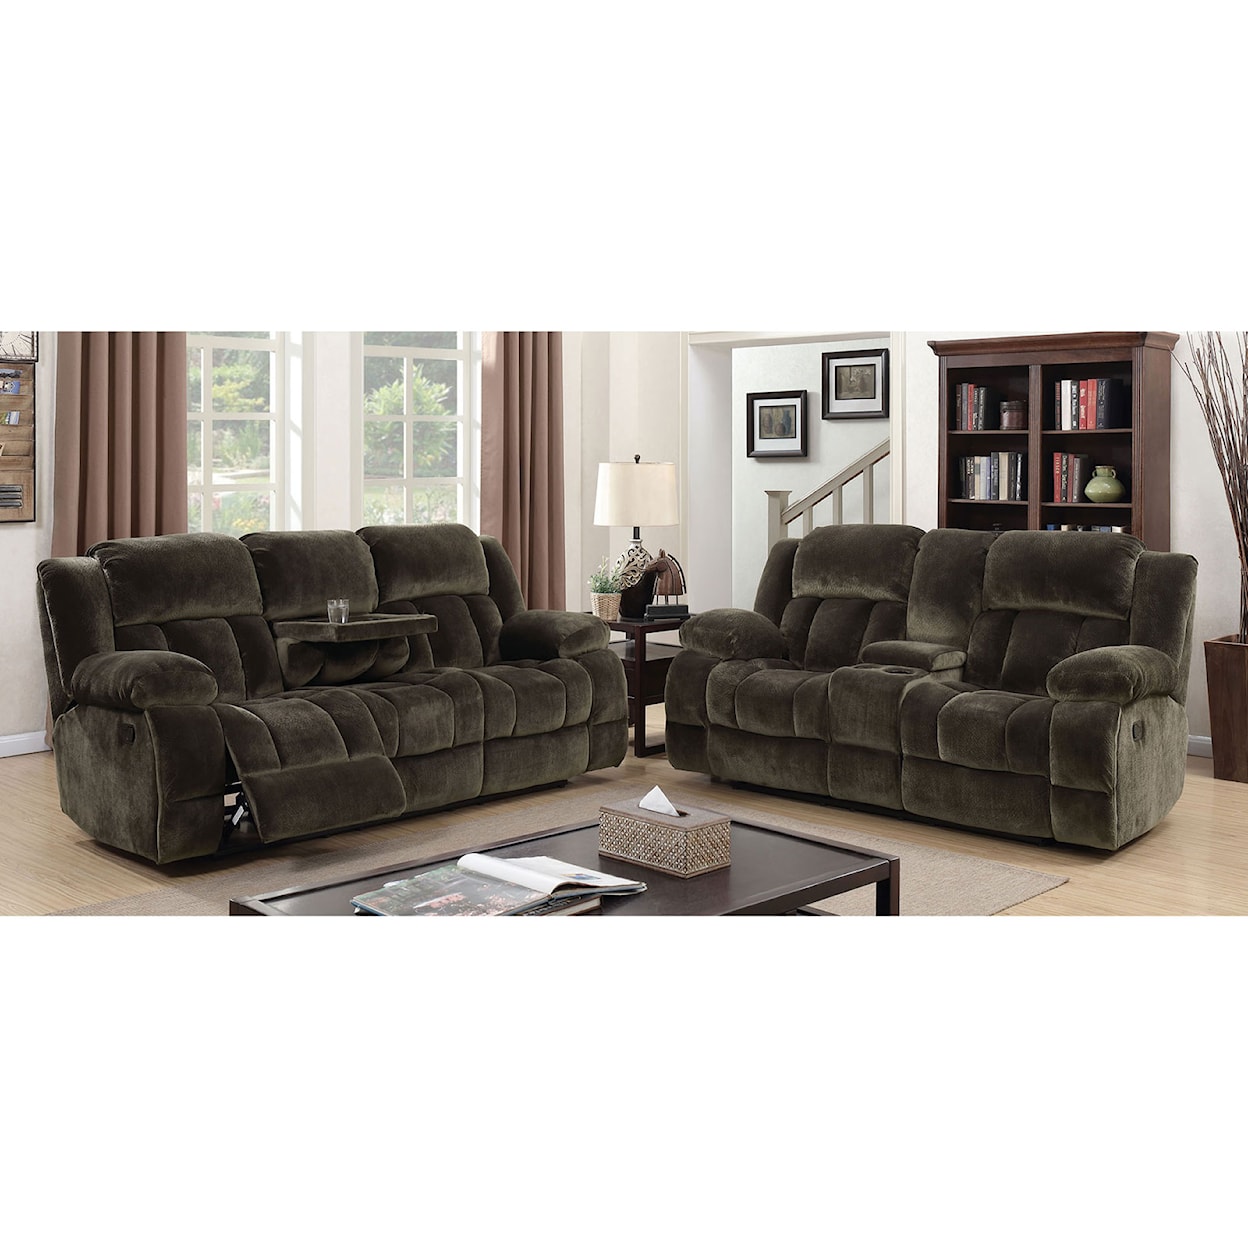 Furniture of America Sadhbh 3-Piece Living Room Set